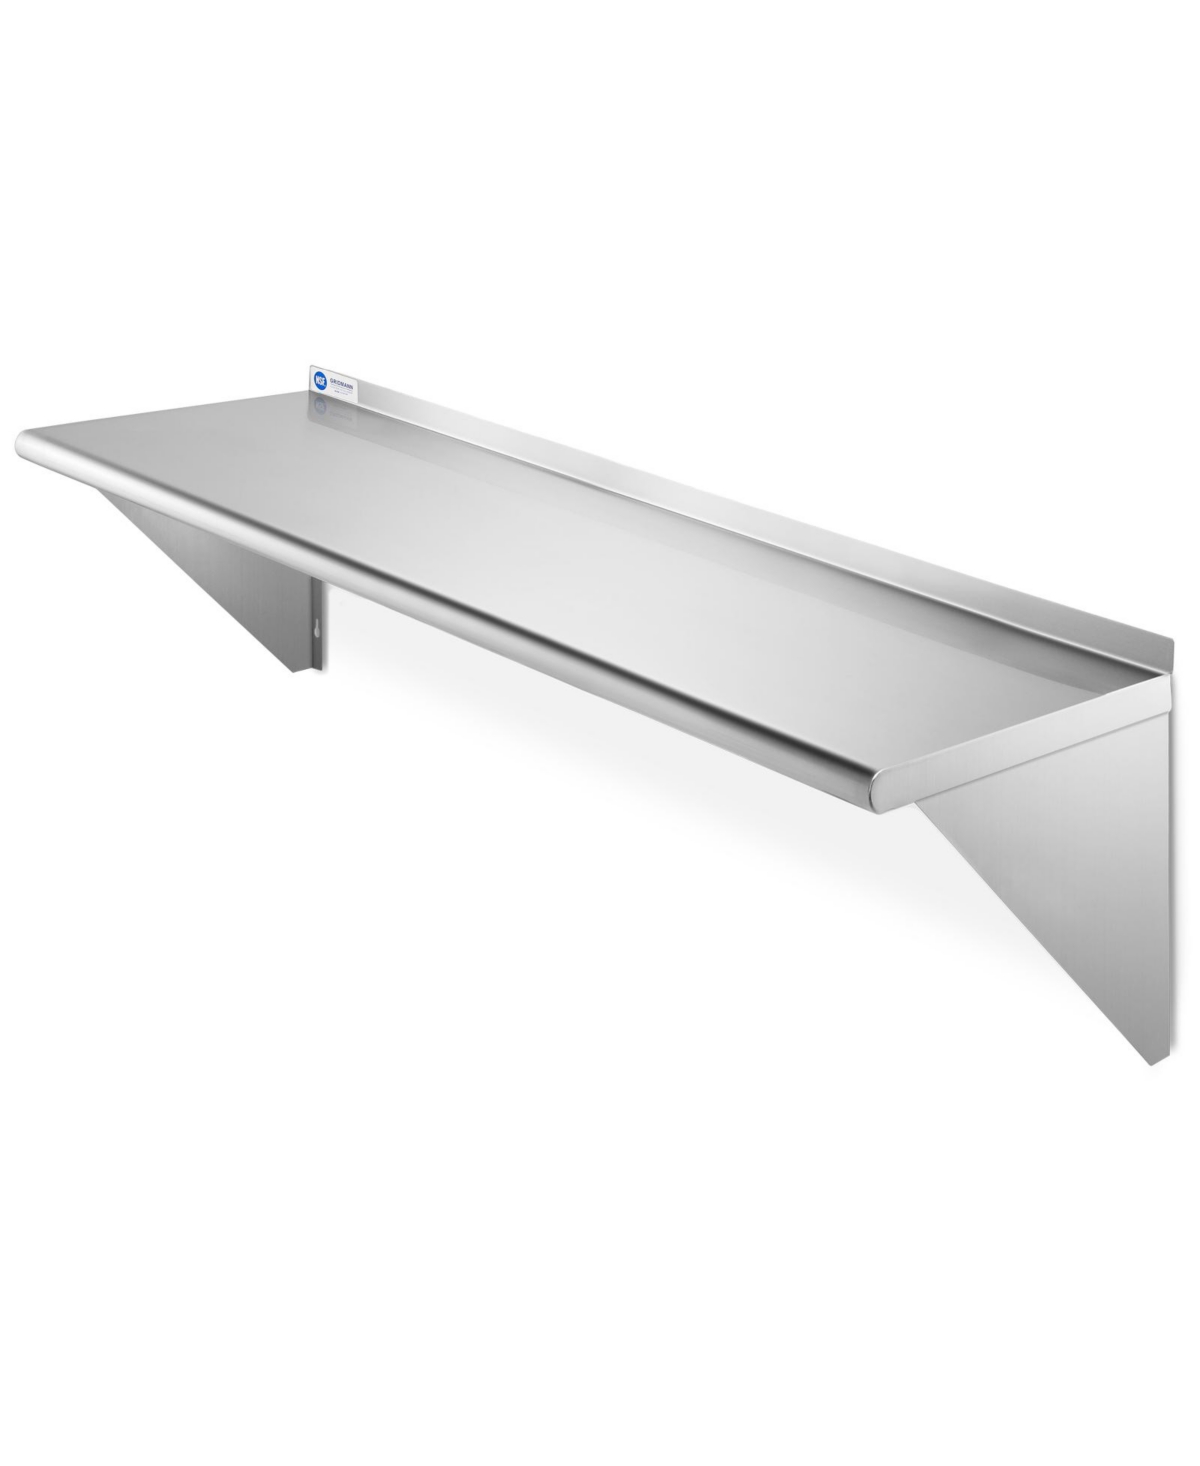 16 Gauge 12" x 48" Nsf Stainless Steel Kitchen Wall Mount Shelf w/ Backsplash - Silver